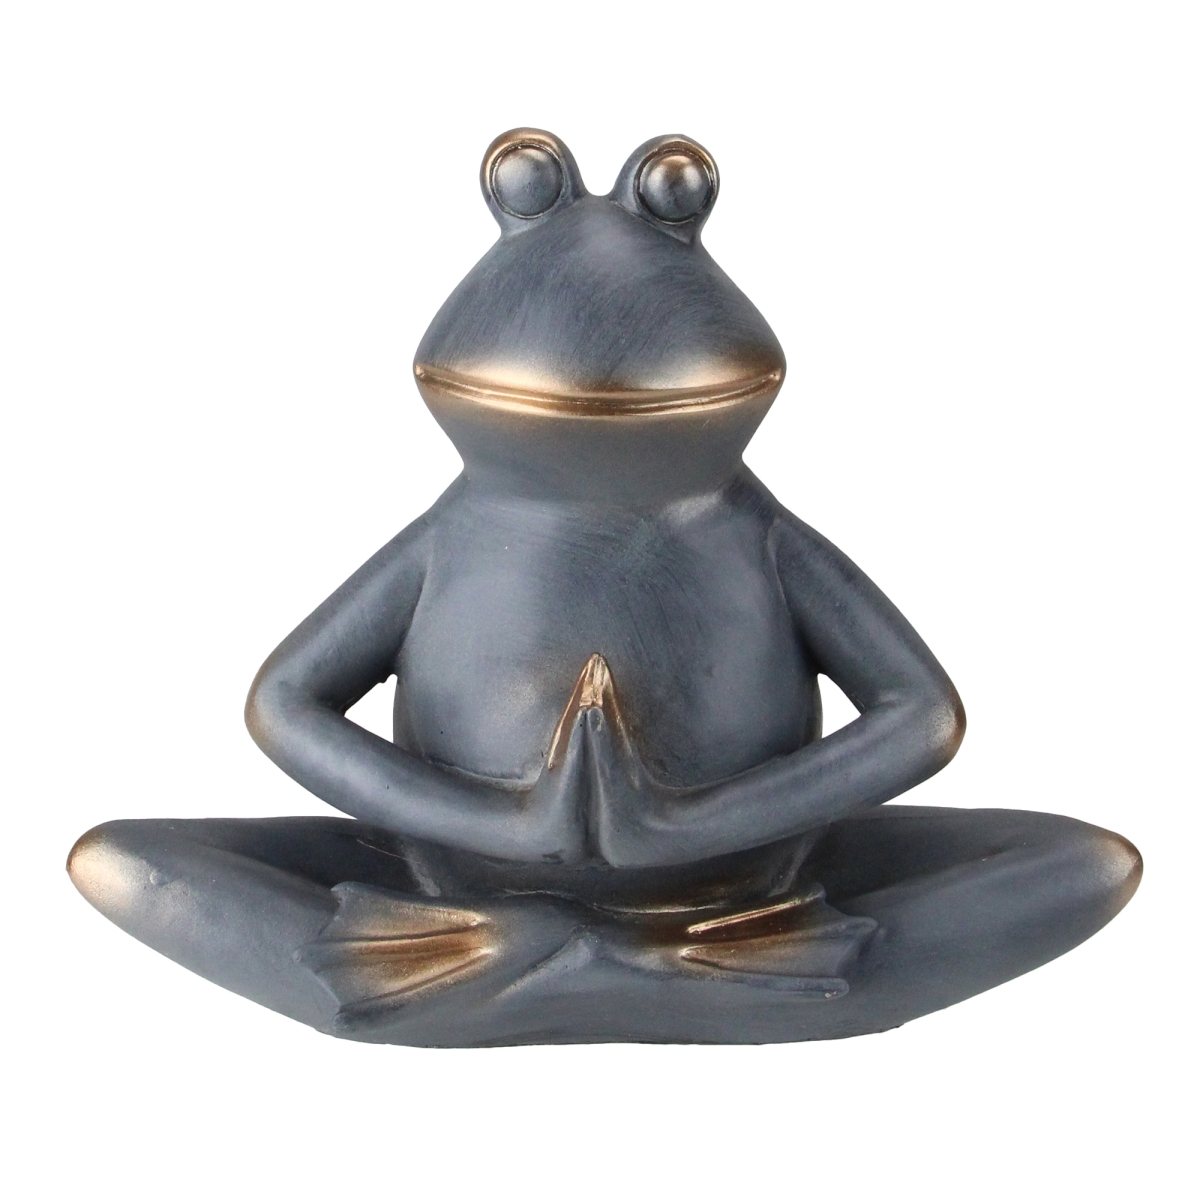 33377618 11 In. Frog Sitting In A Sukhasana Yoga Position Garden Statue